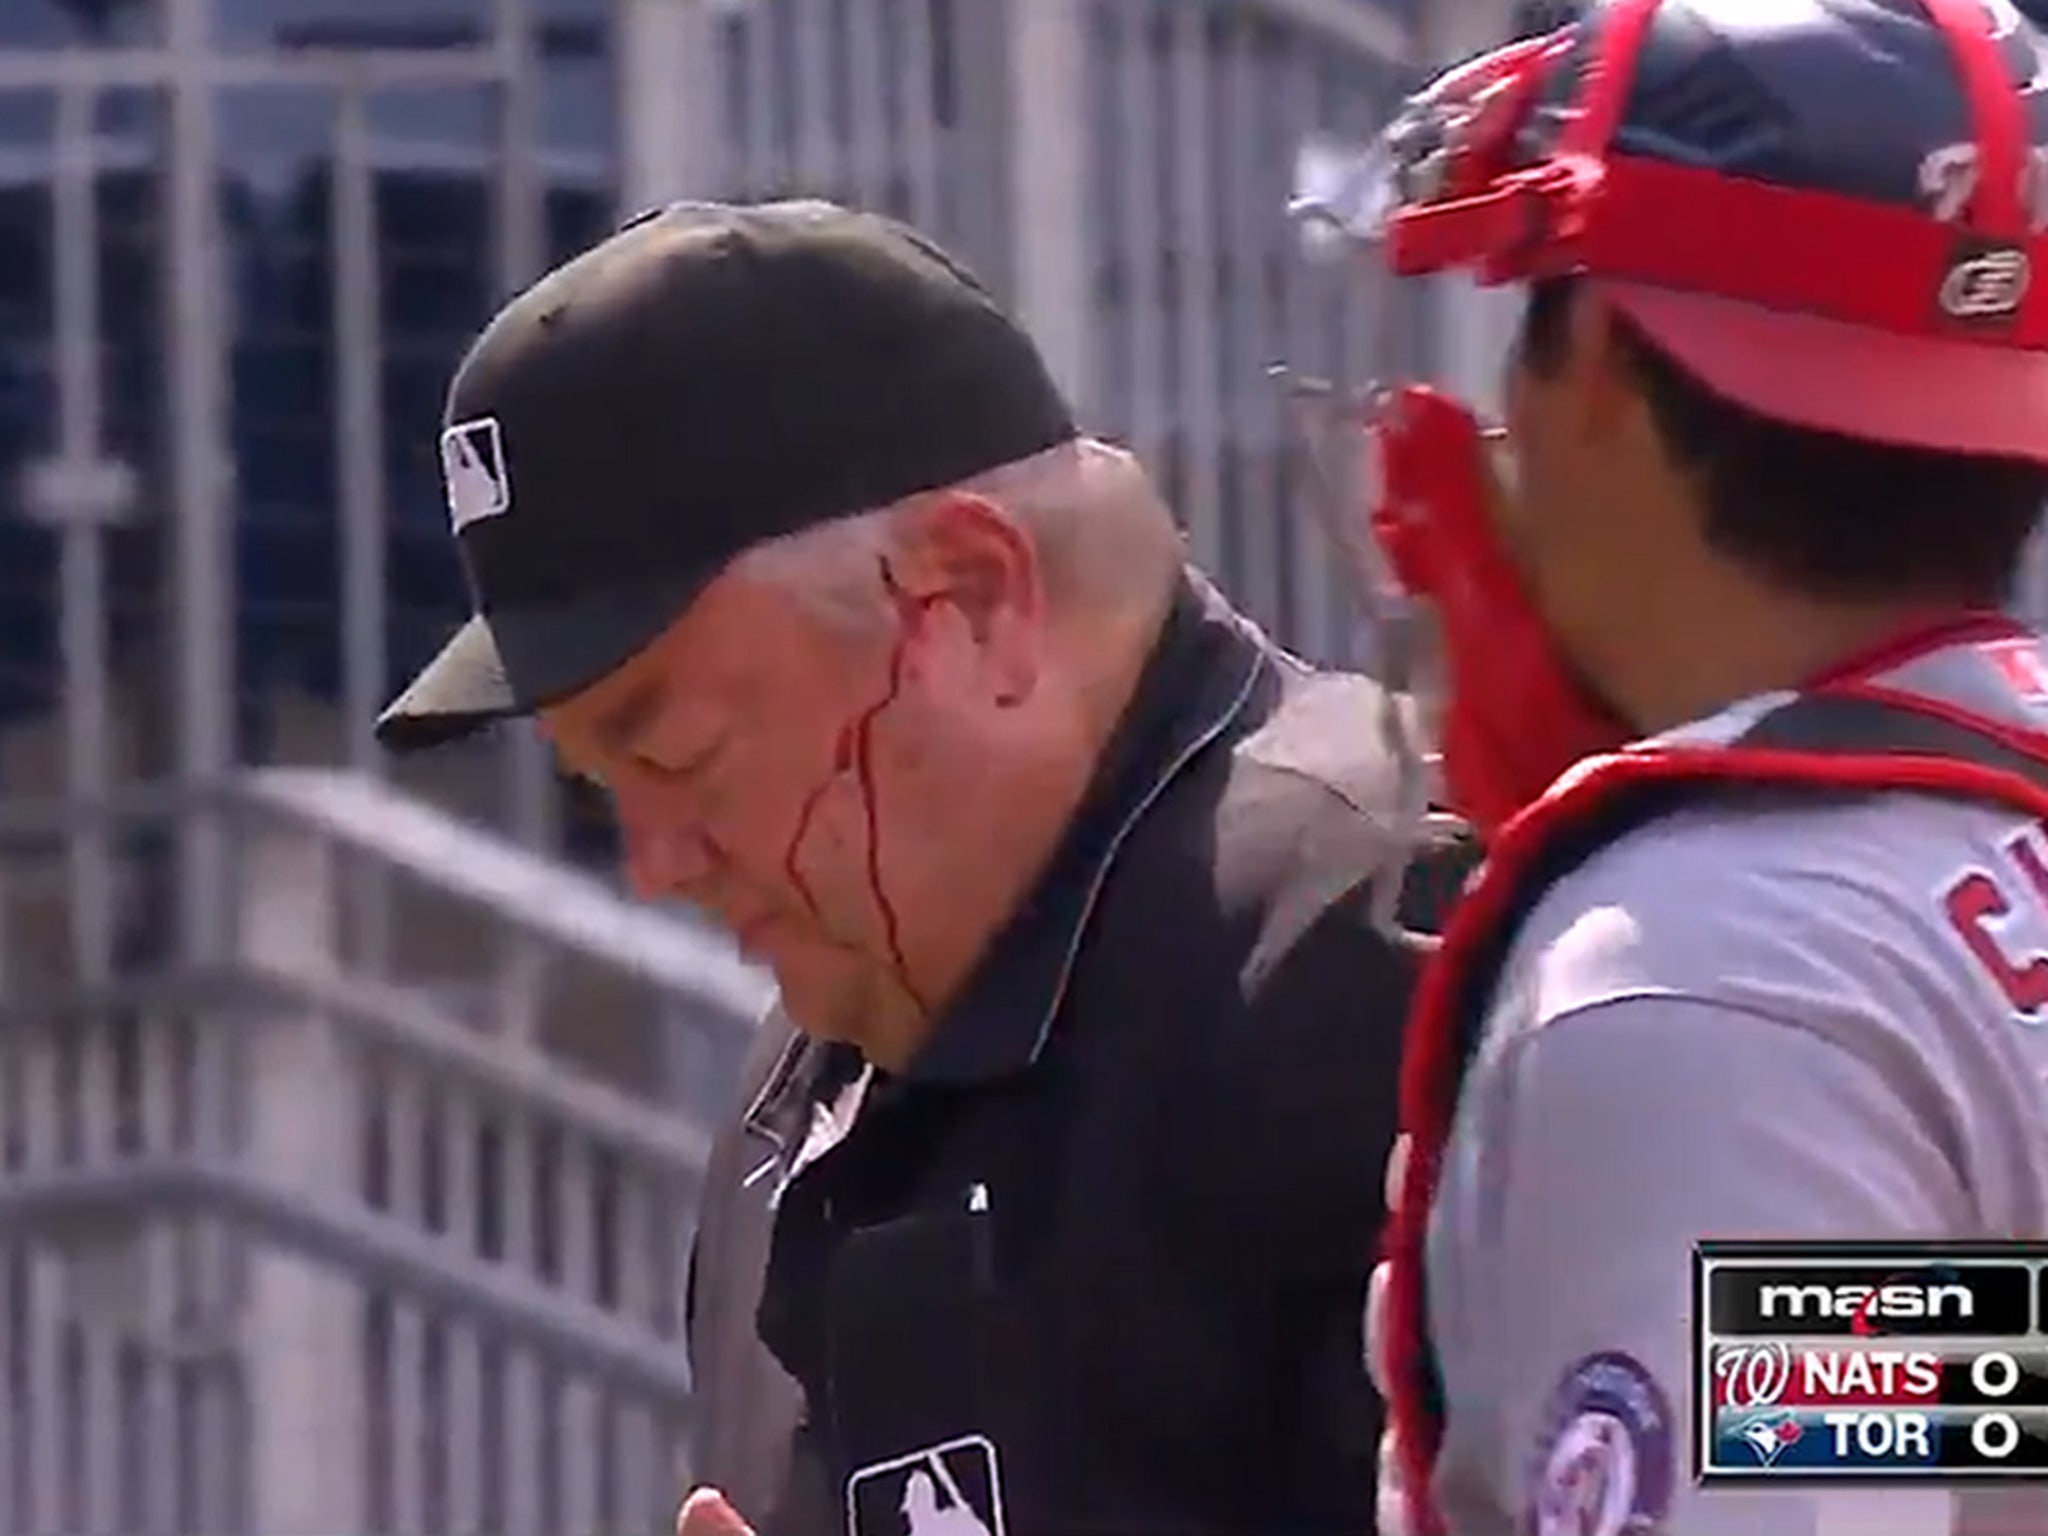 MLB umpire Joe West, at last, is retiring - Bleed Cubbie Blue